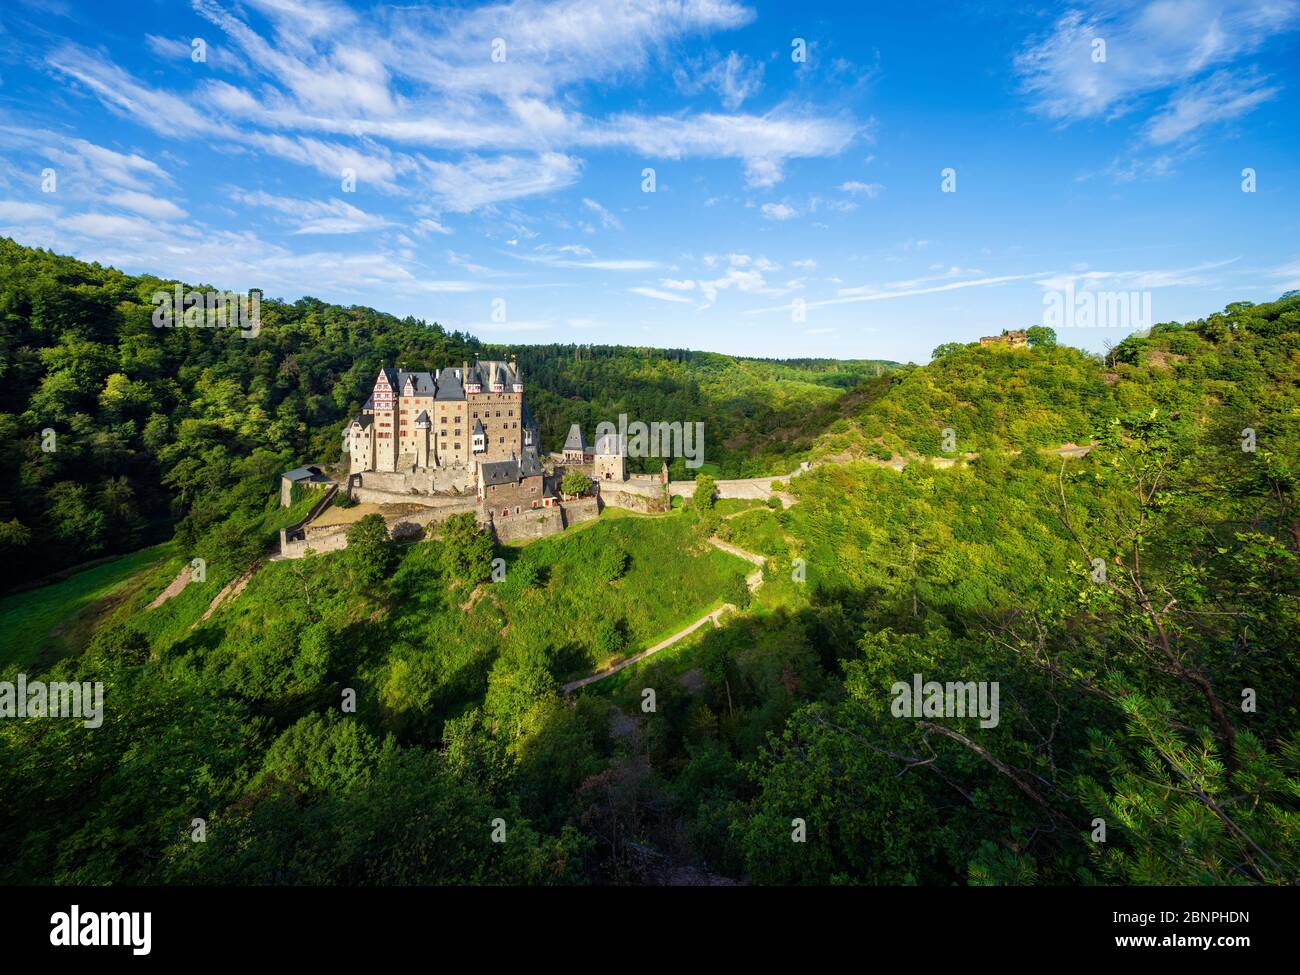 Germany, Rhineland-Palatinate, Münstermaifeld, Moselle Valley, Eifel, View of Eltz Castle and Trutzeltz Ruin Stock Photo